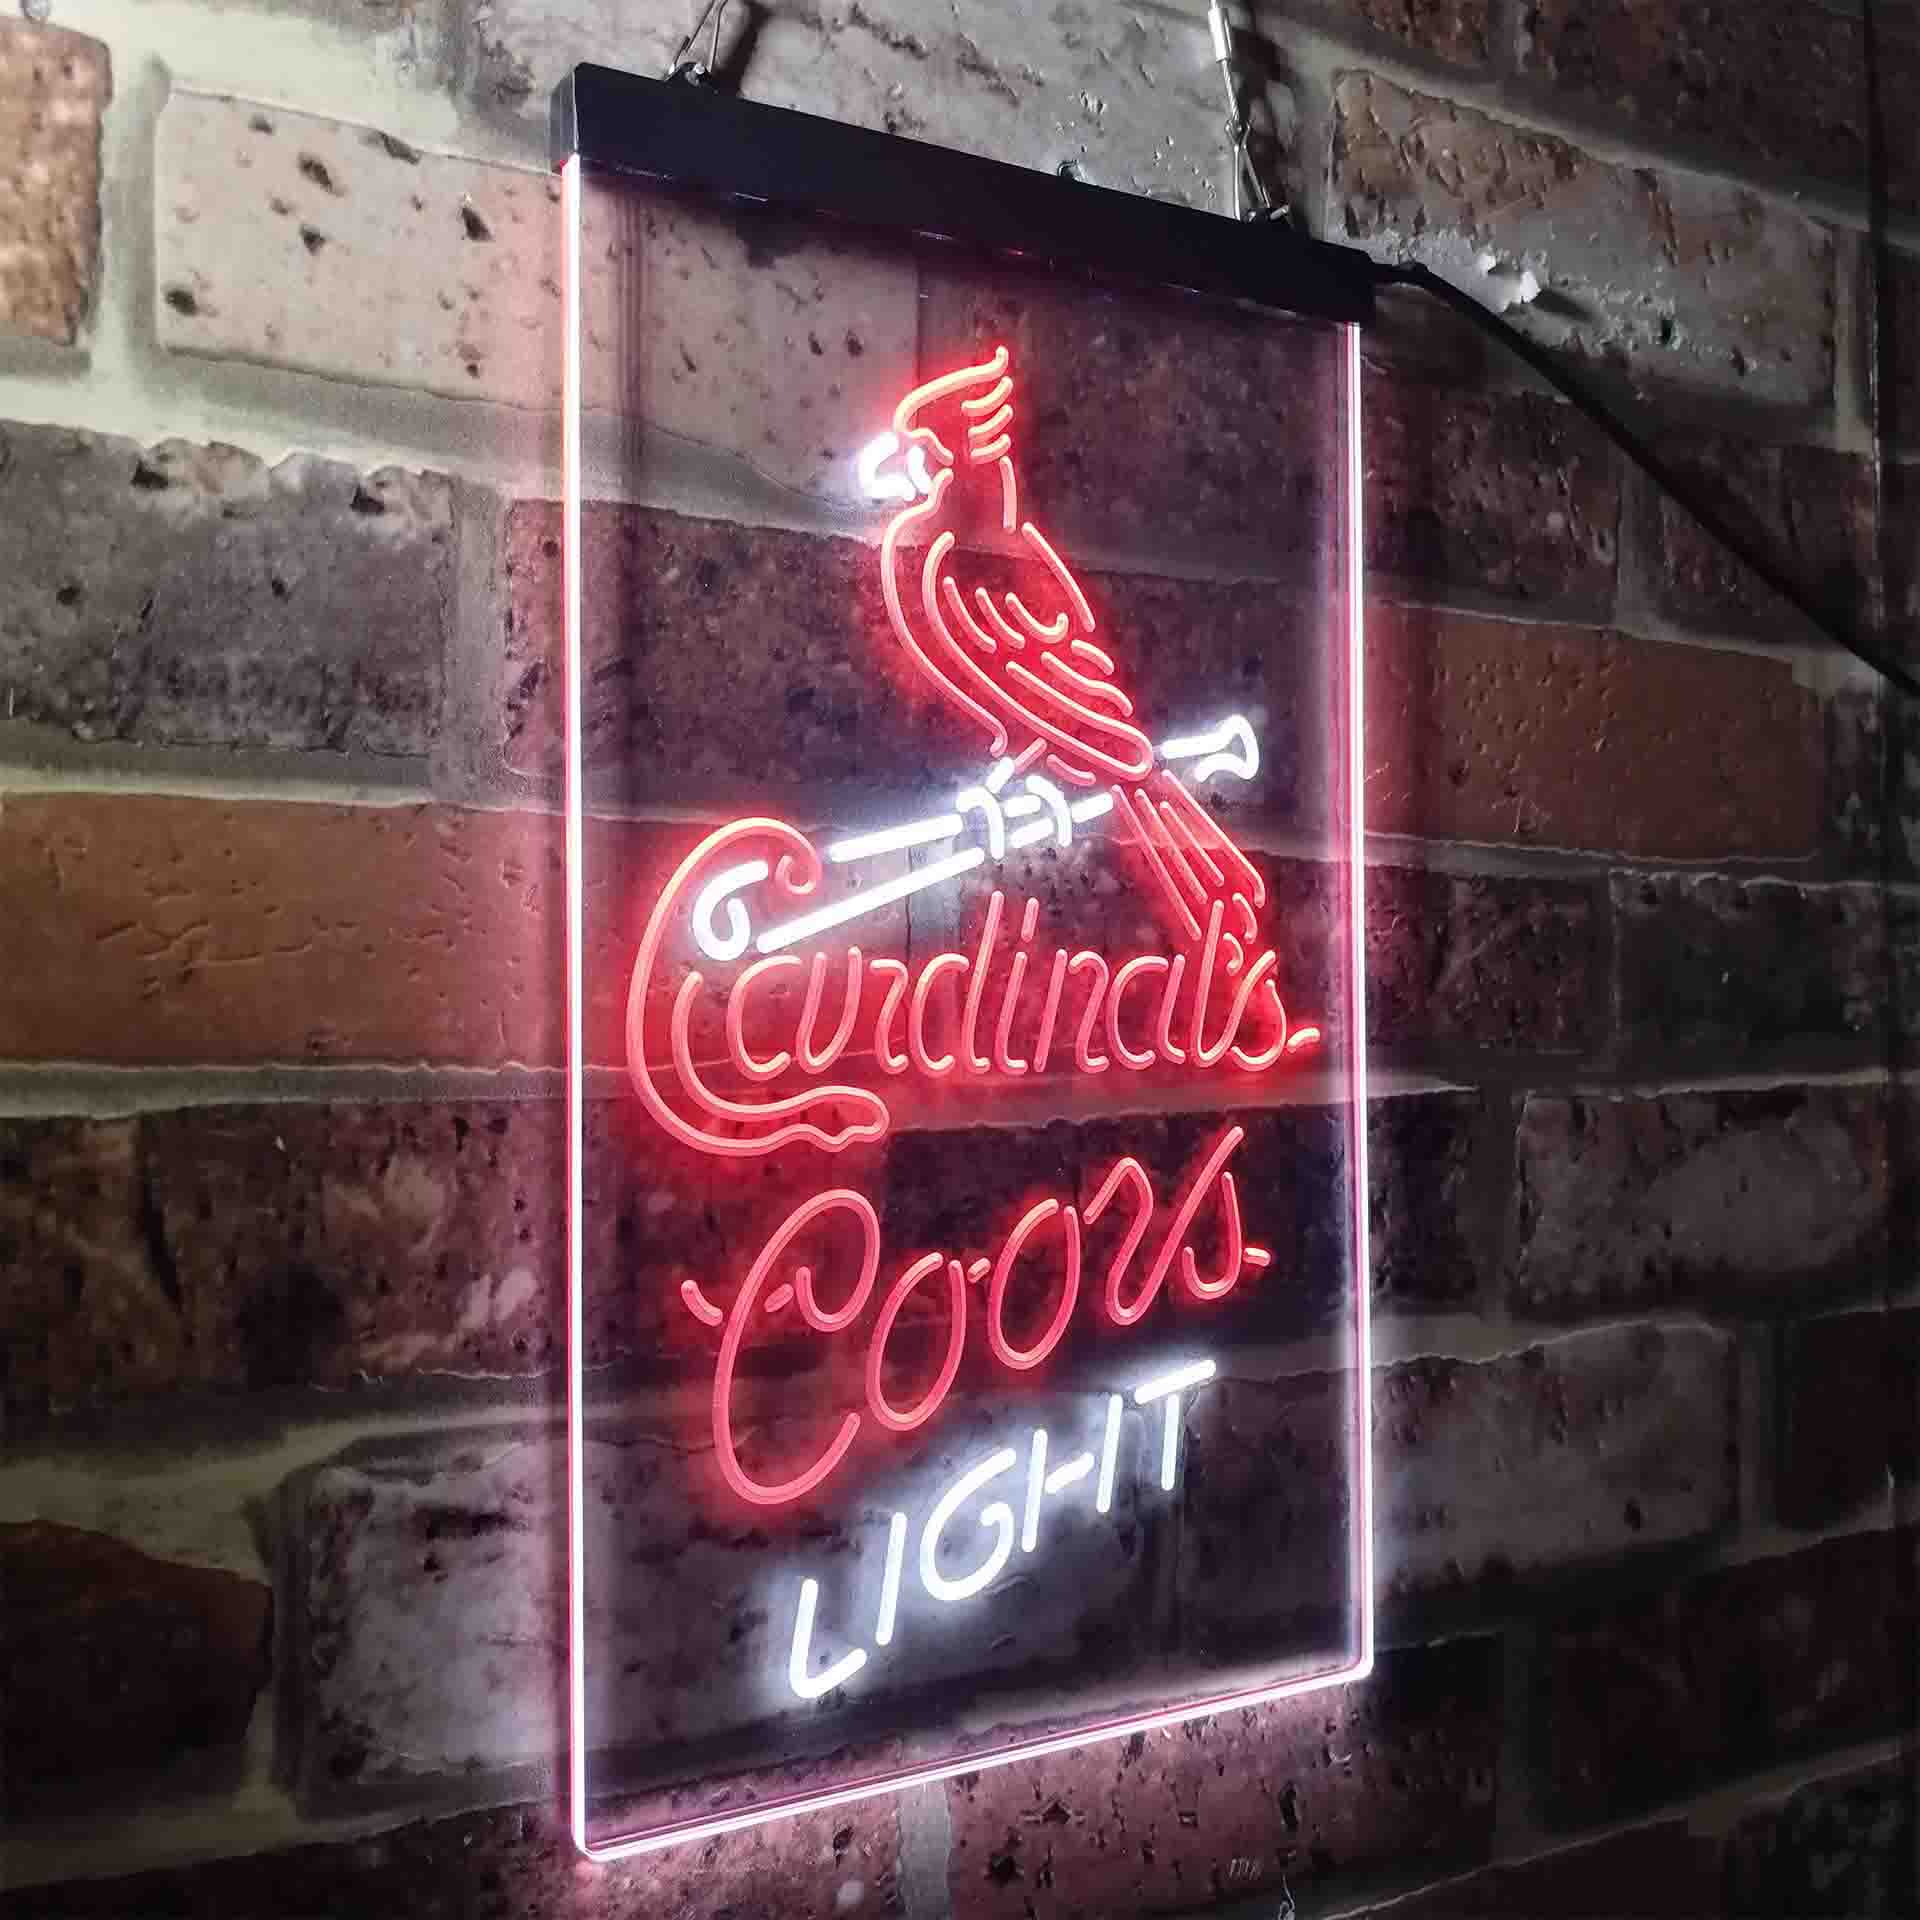 St Louis Cardinals Coors Light LED Neon Sign